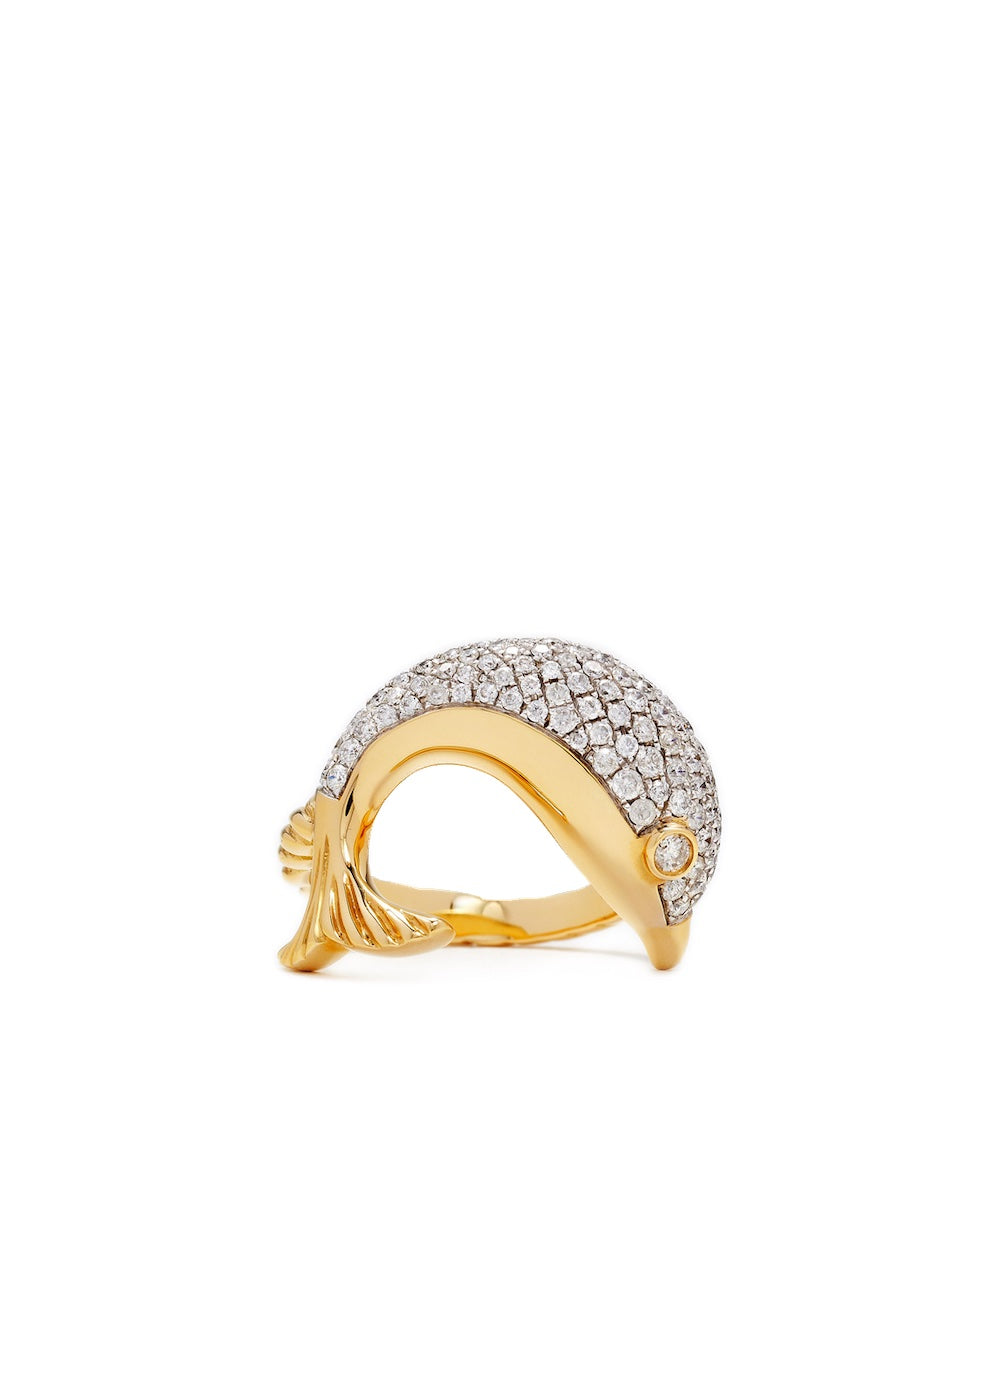 Bague Dauphin 18k yellow gold diamond ring